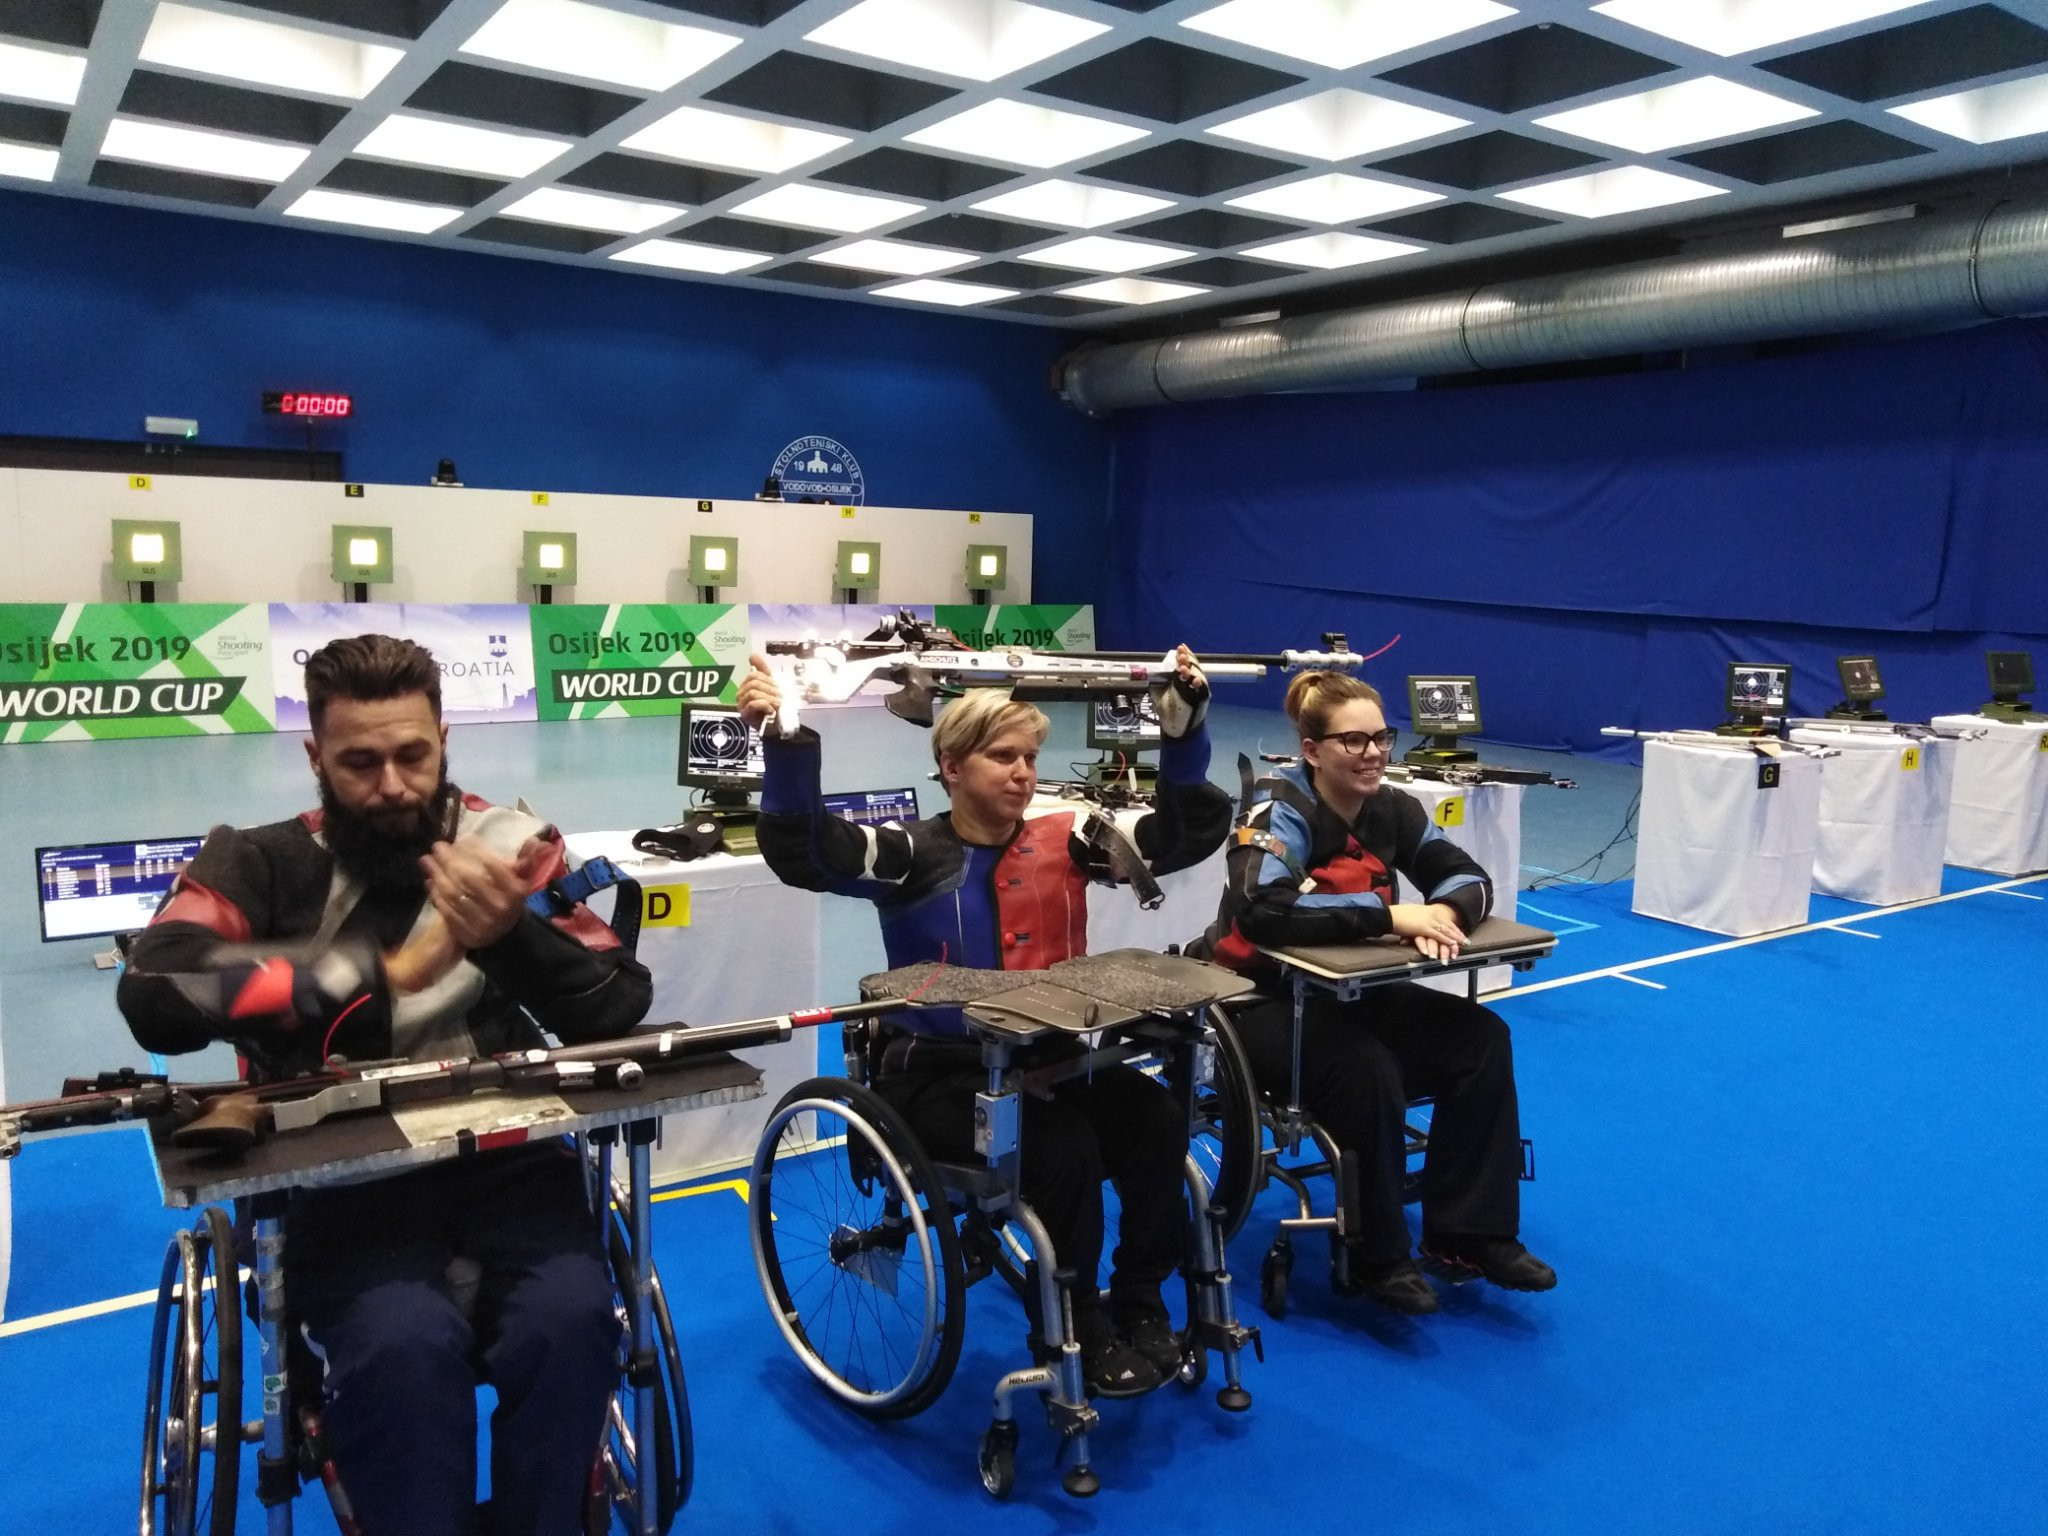 Vadovičová strikes gold at World Shooting Para Sport World Cup